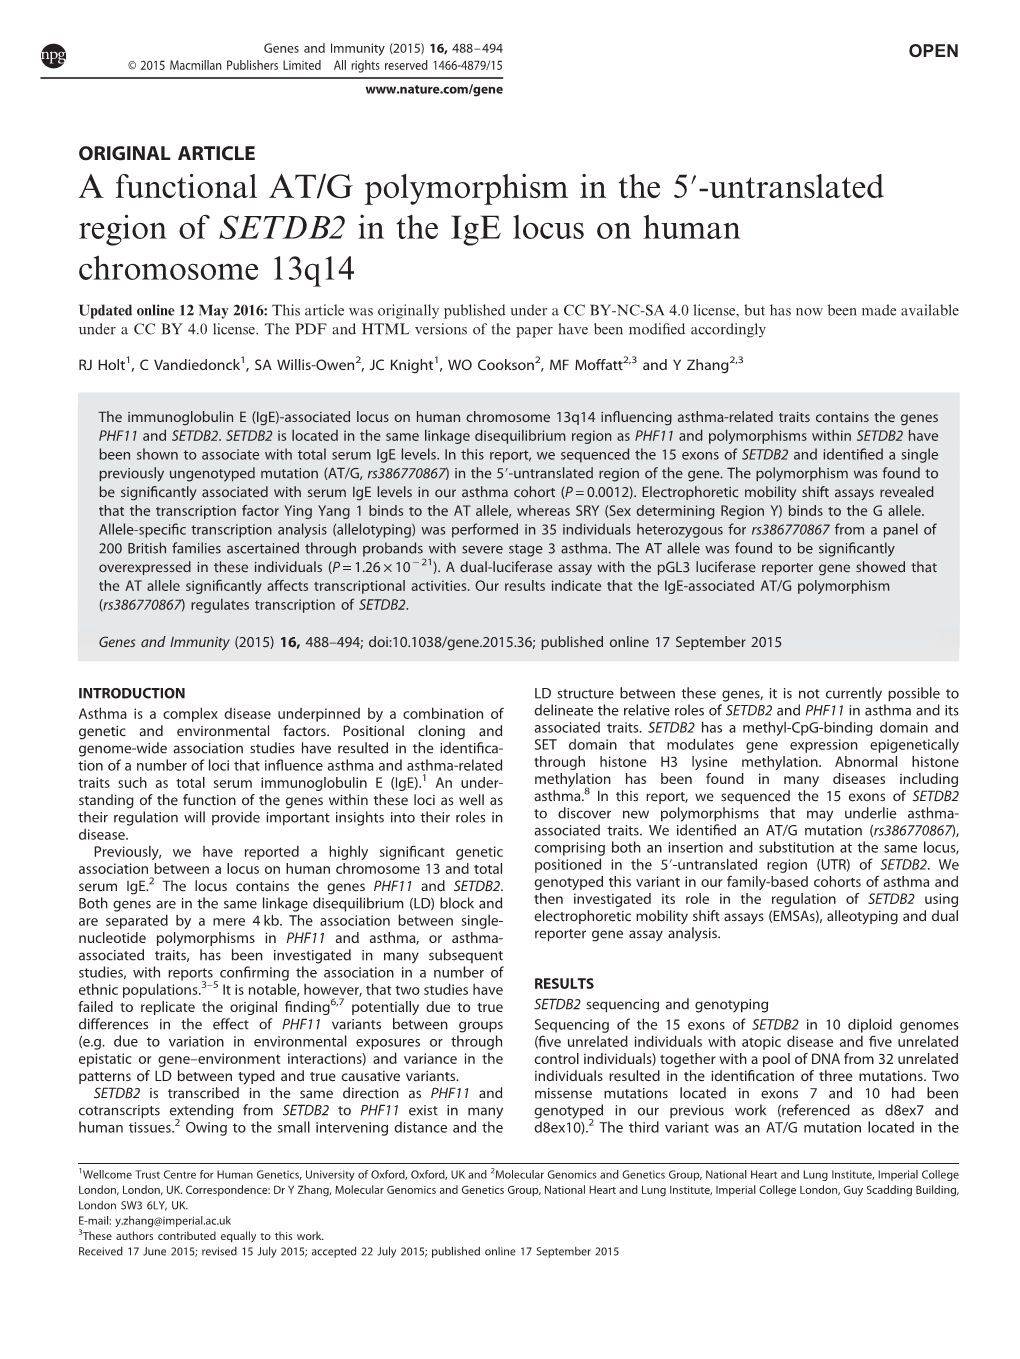 Untranslated Region of SETDB2 in the Ige Locus on Human Chromosome 13Q14